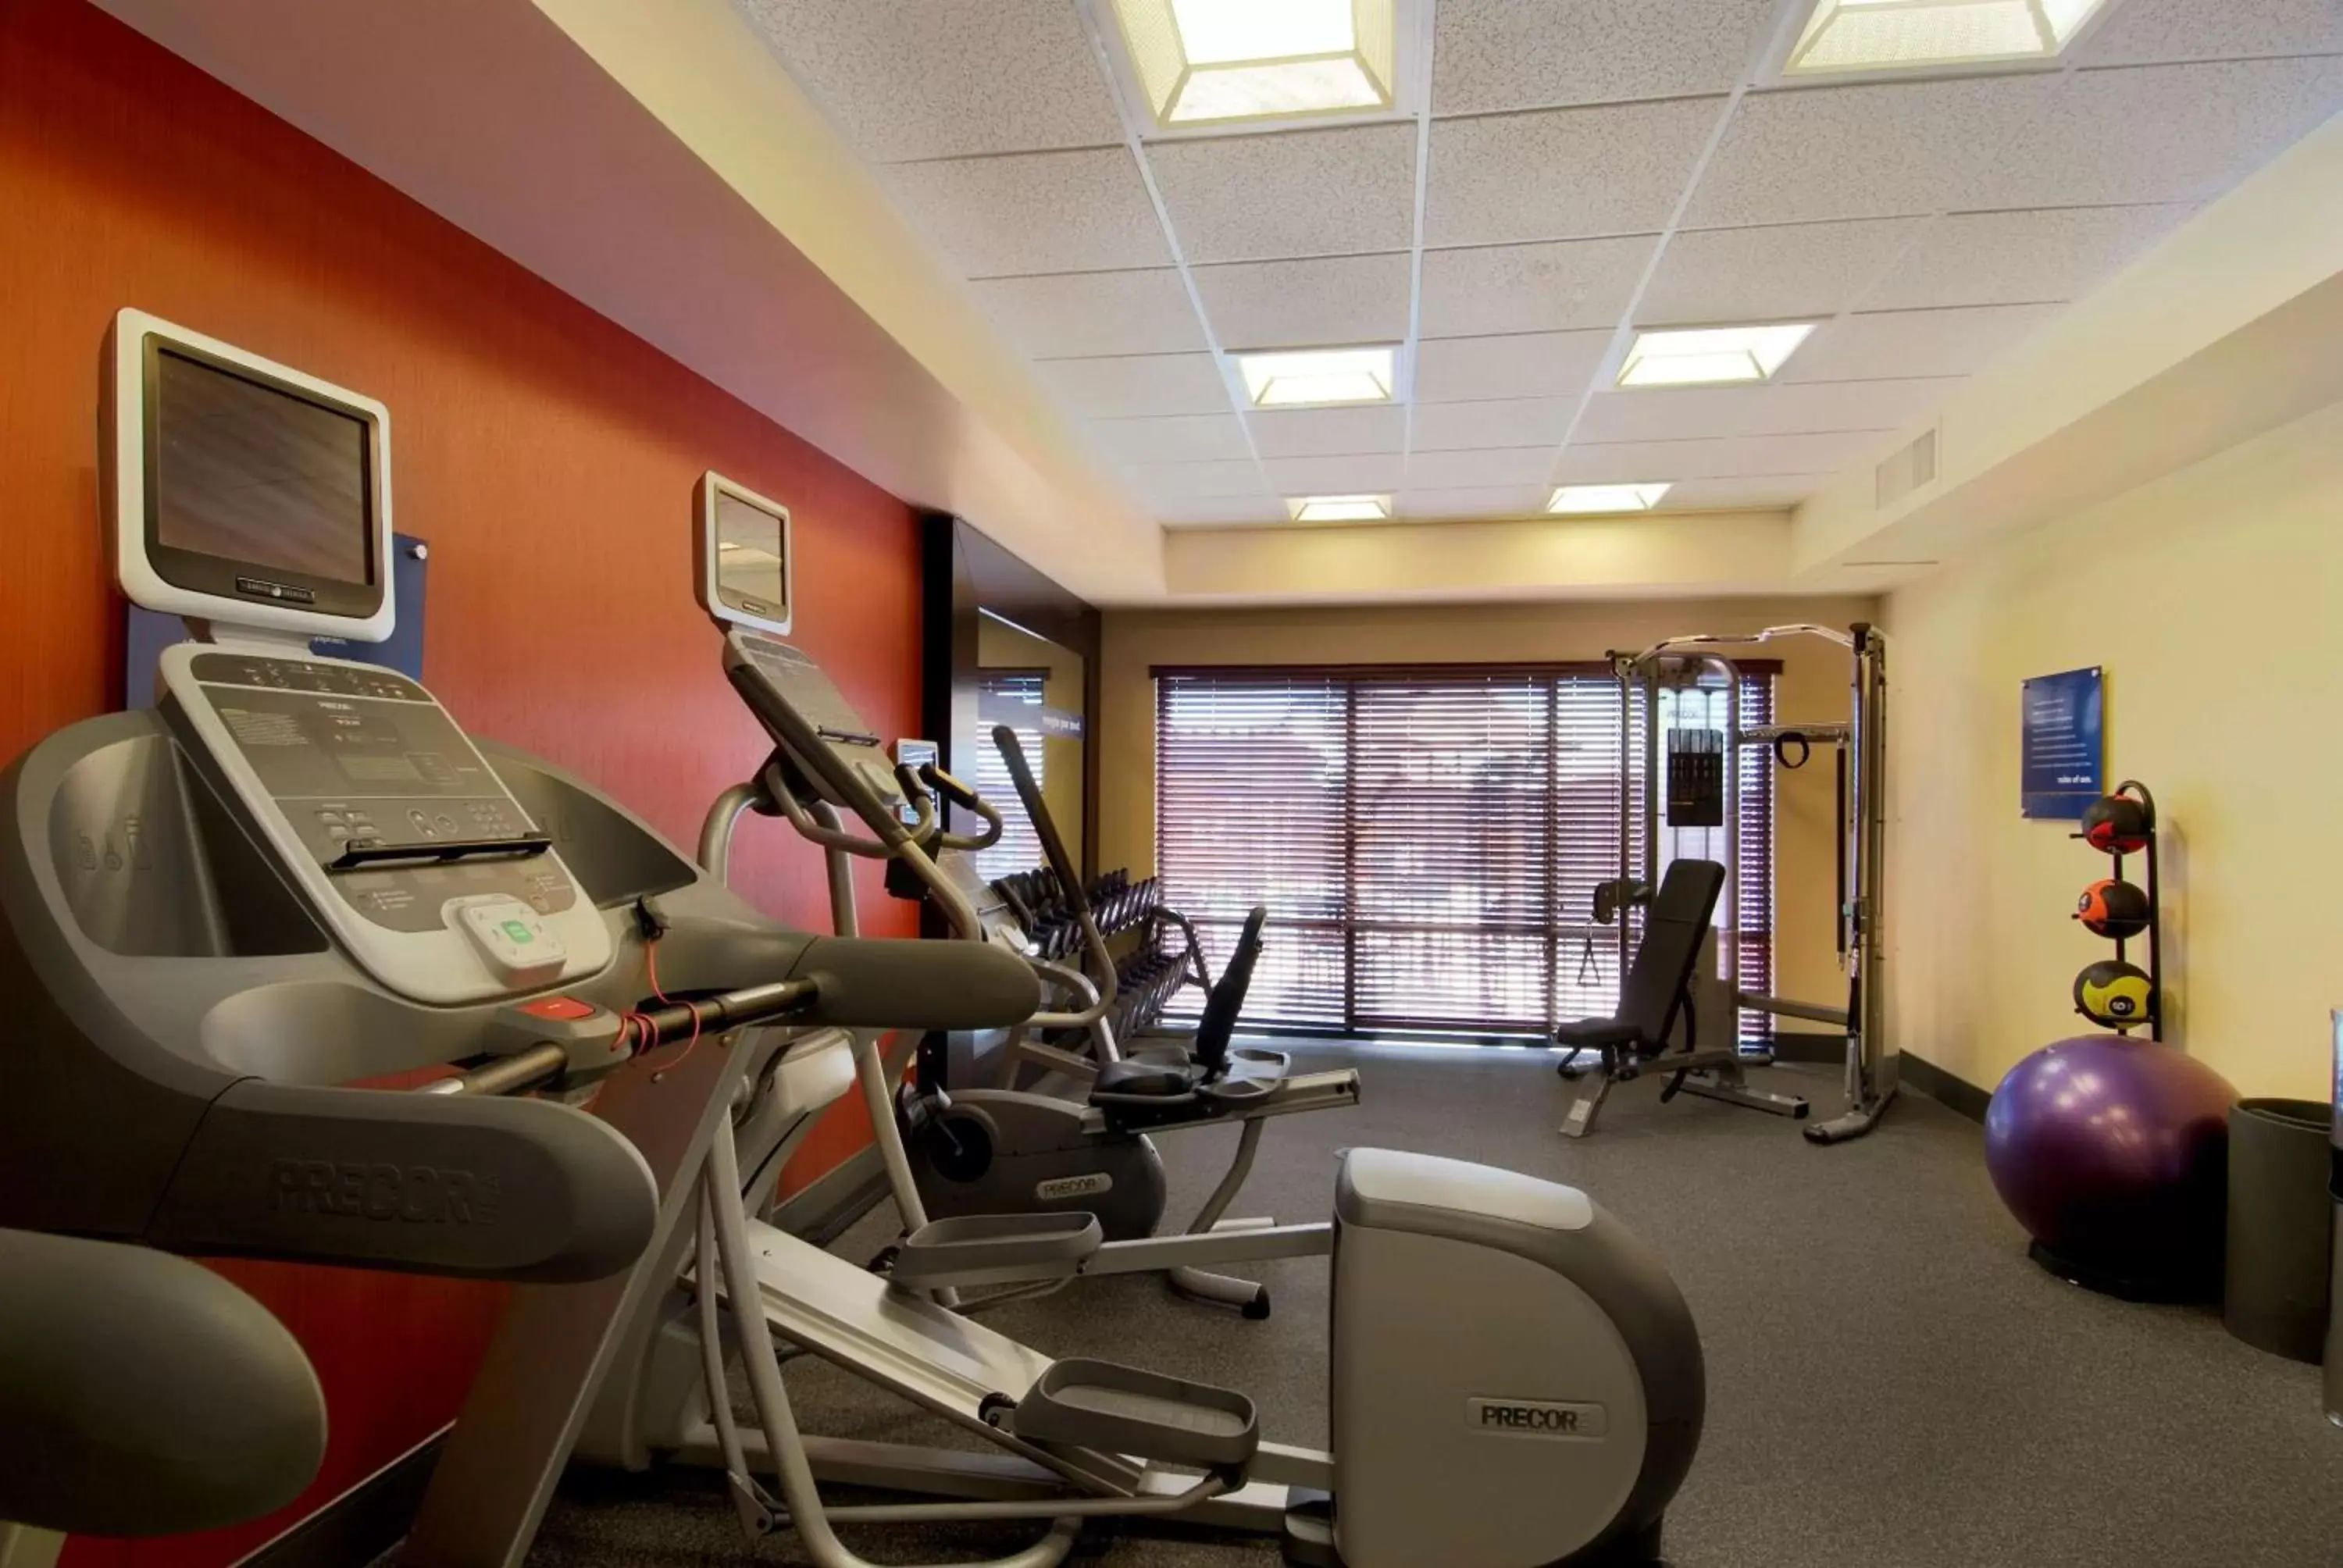 Fitness centre/facilities, Fitness Center/Facilities in Hampton Inn & Suites Lodi